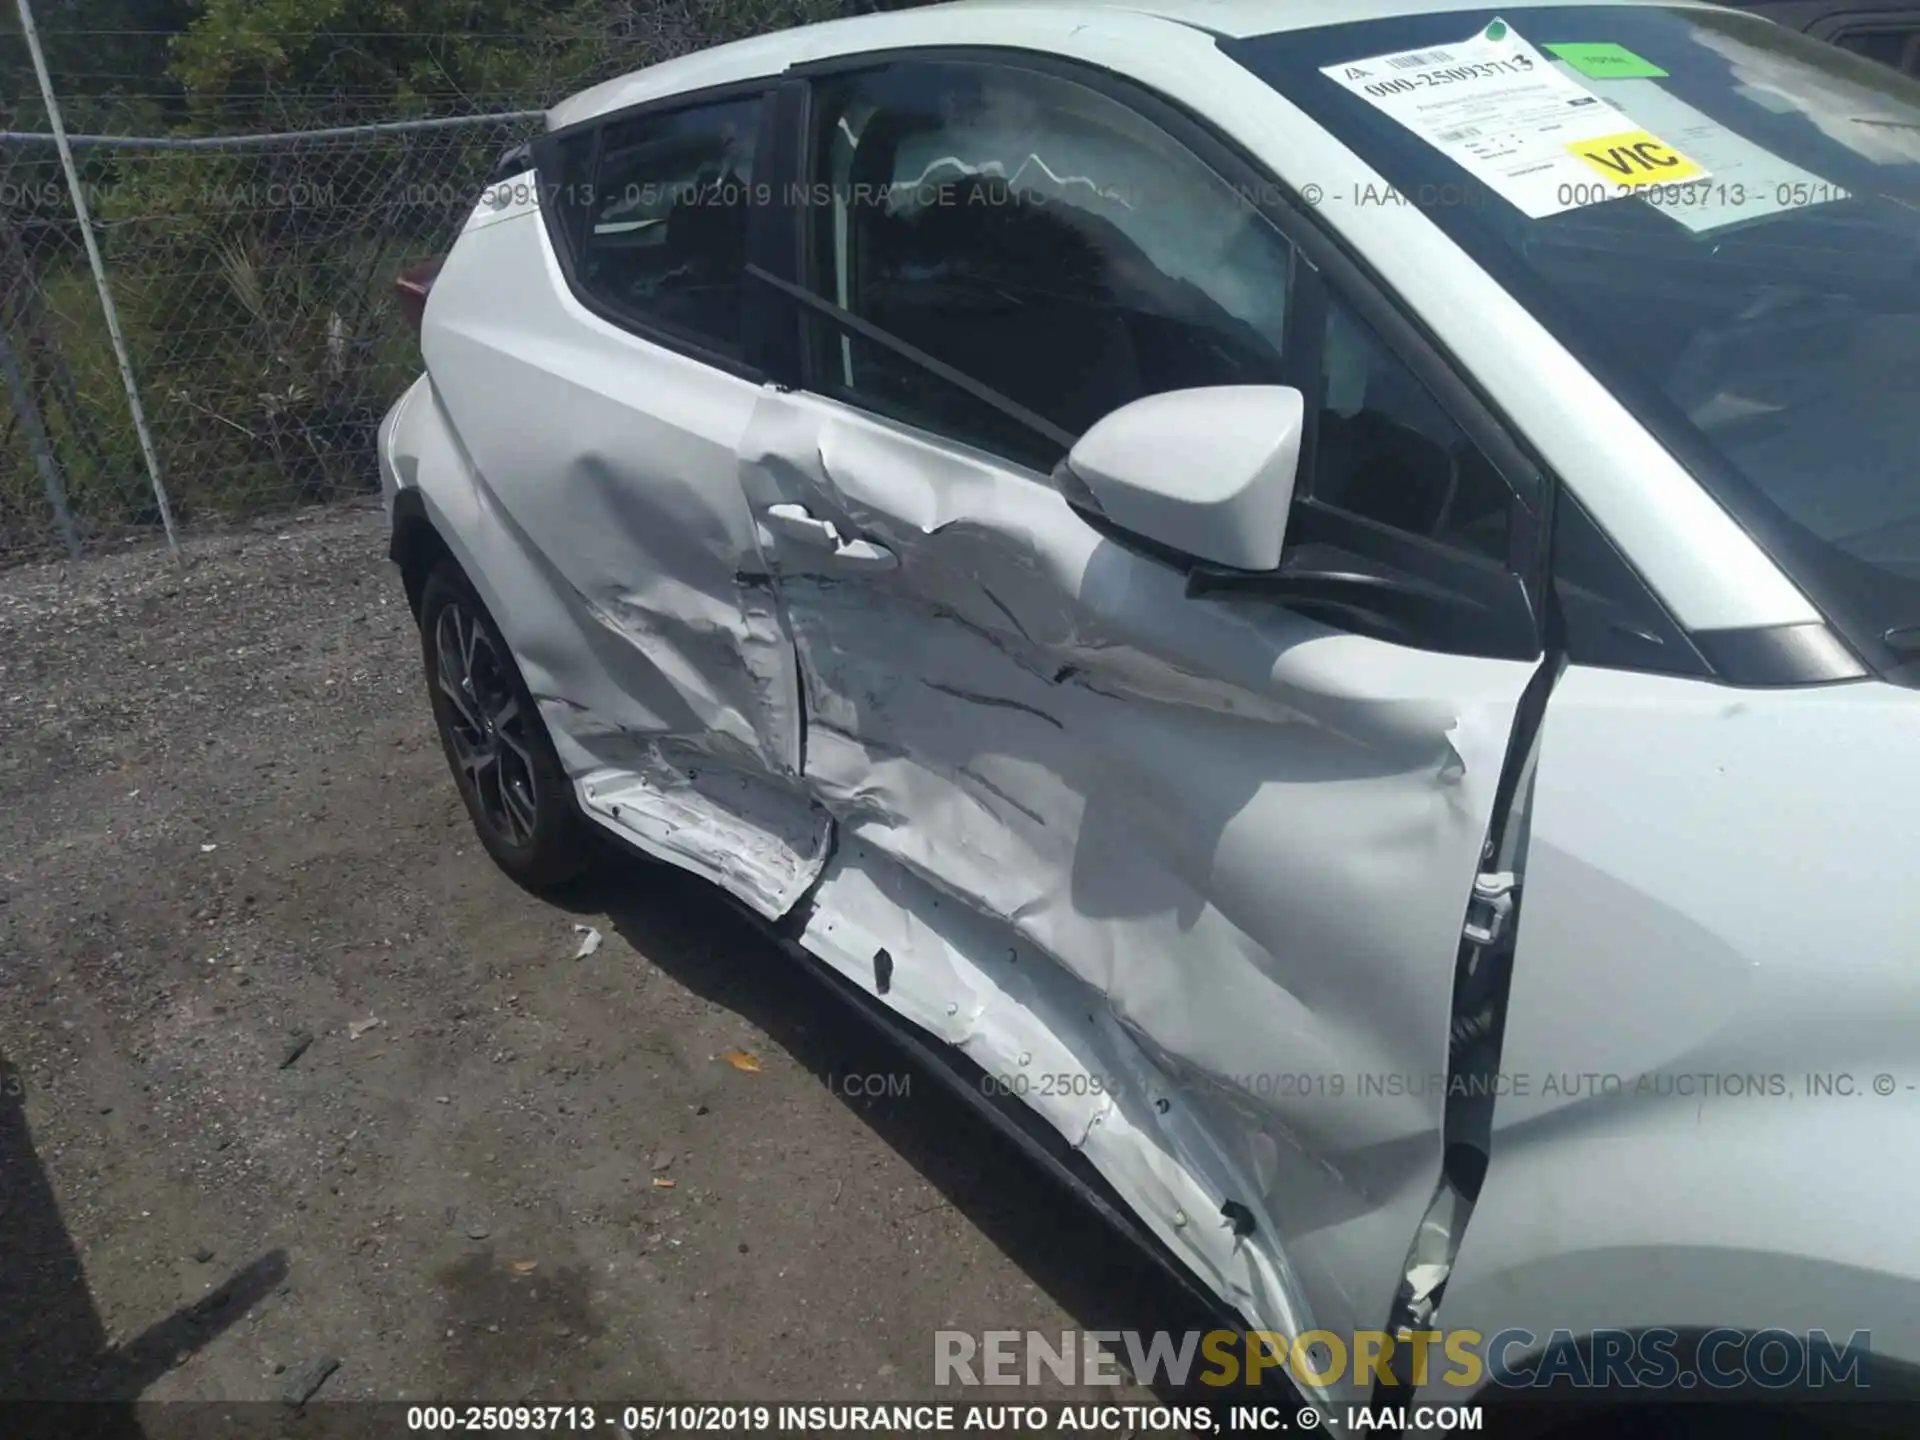 6 Photograph of a damaged car NMTKHMBX9KR080898 TOYOTA C-HR 2019